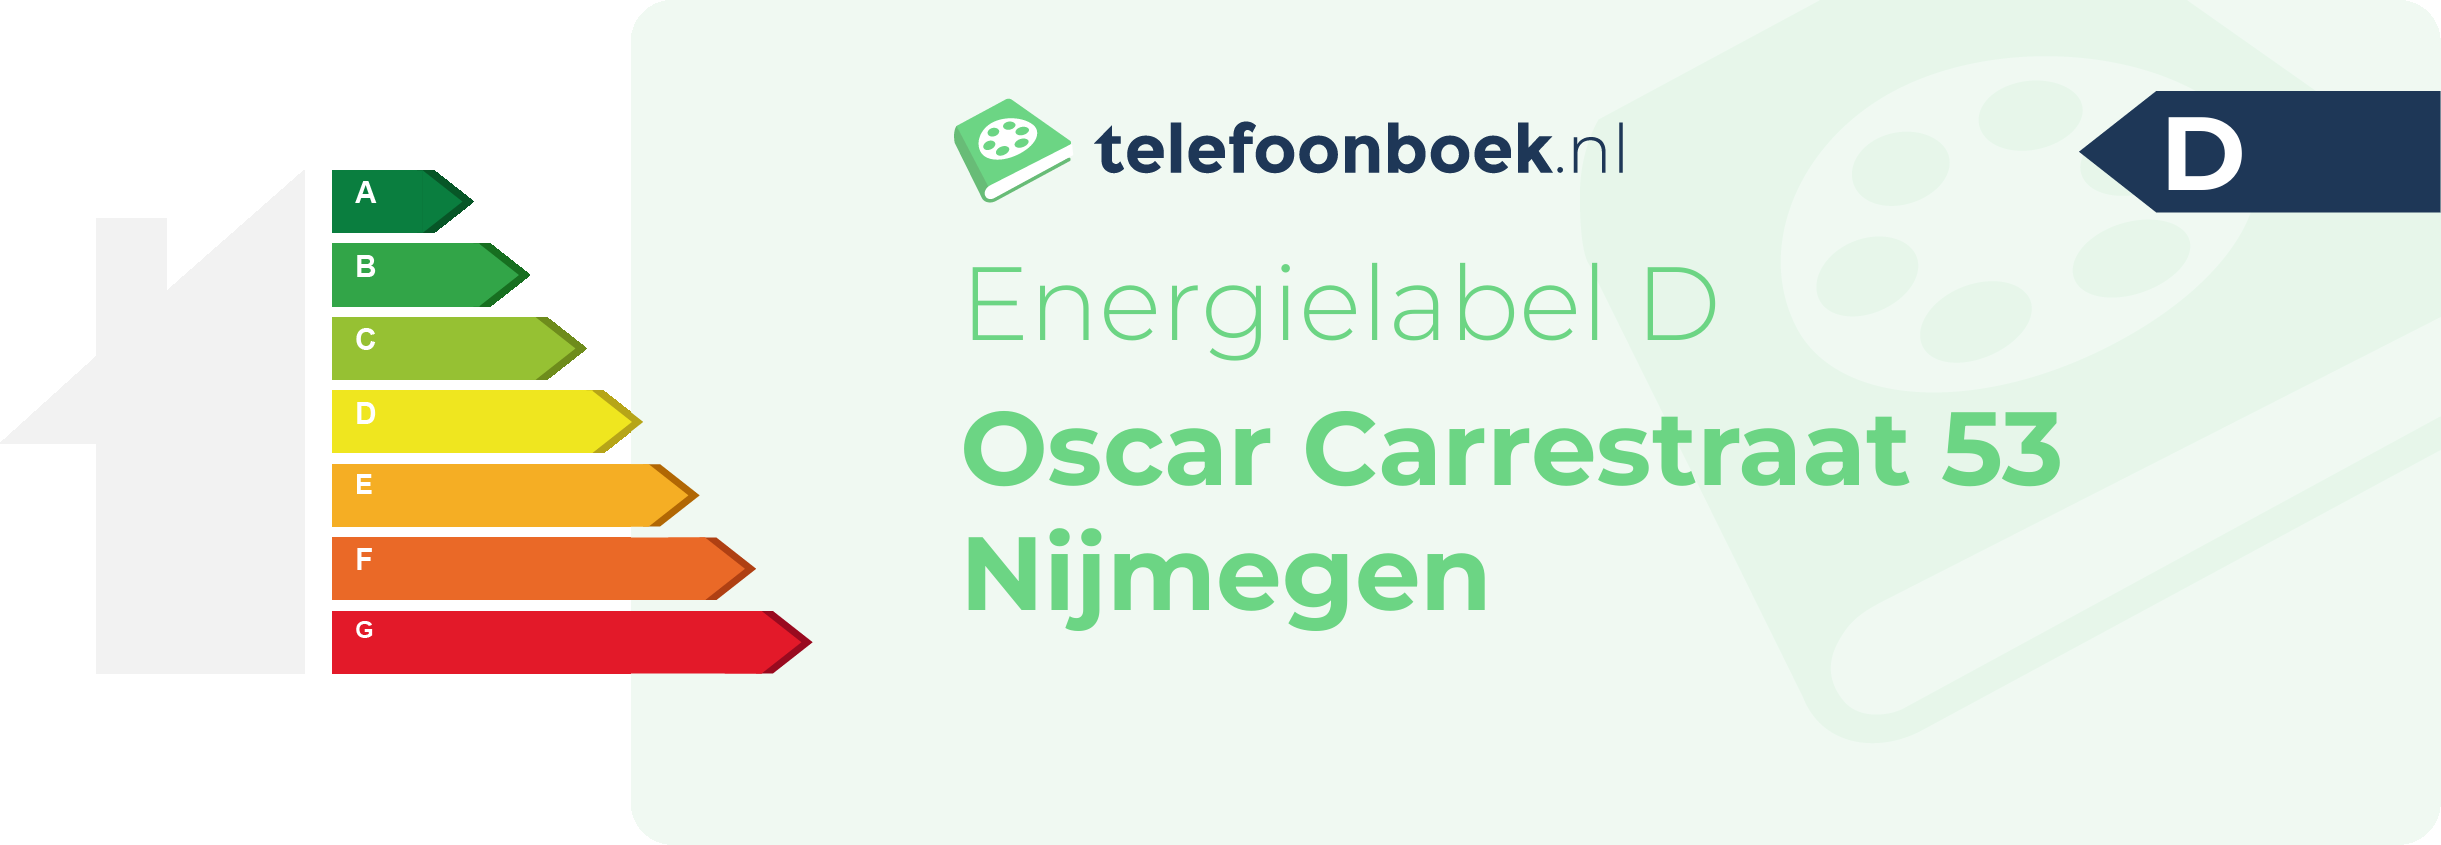 Energielabel Oscar Carrestraat 53 Nijmegen